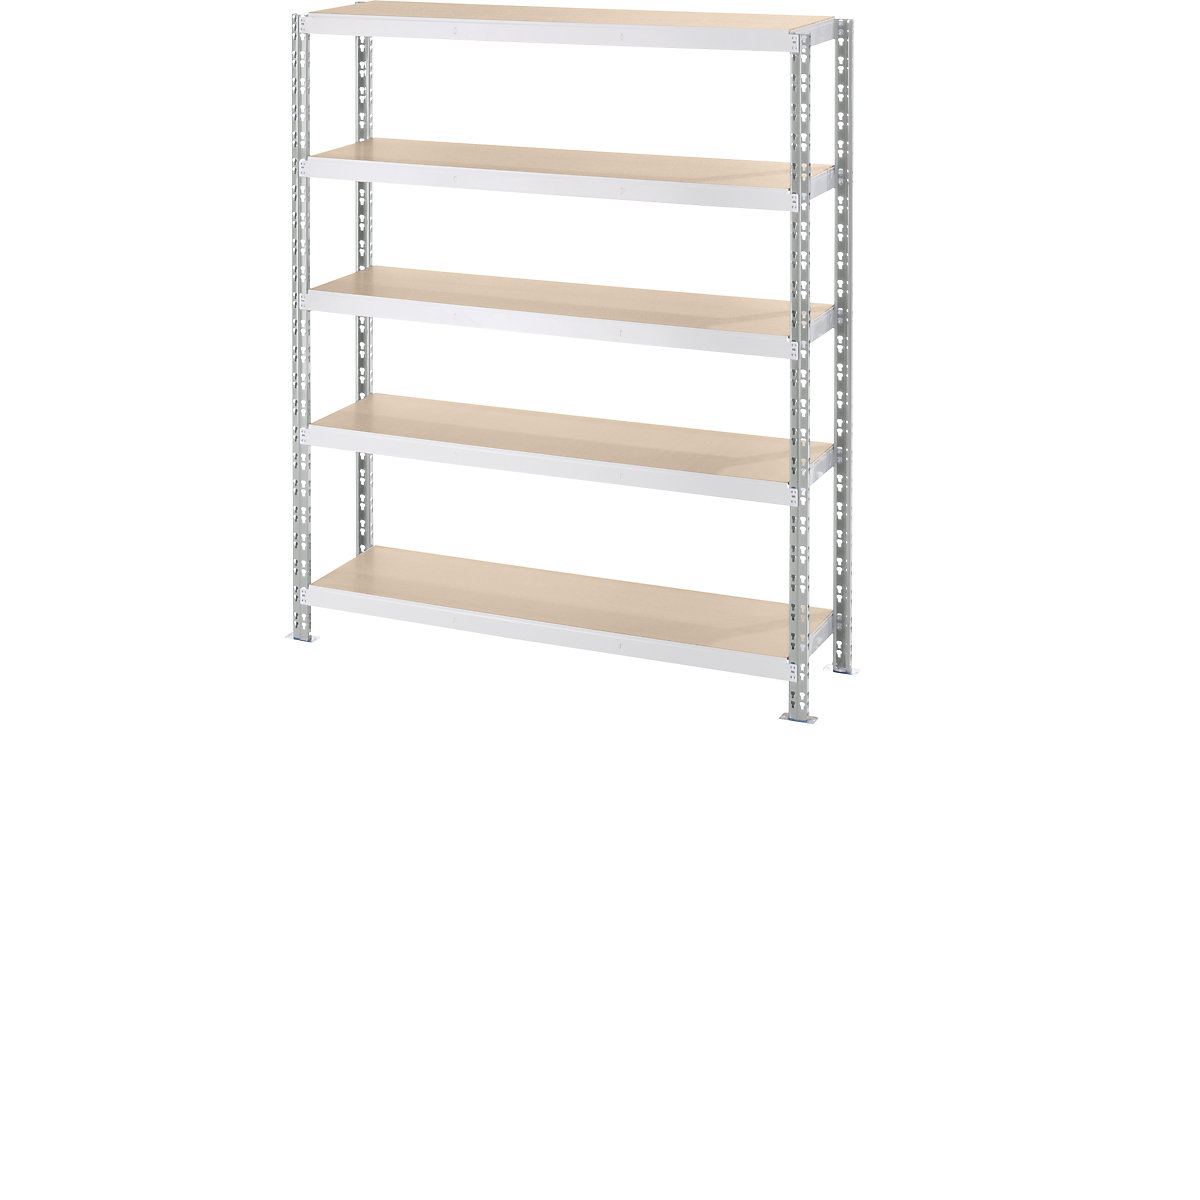 Wide span boltless shelf unit with moulded chipboard shelves, depth 400 mm, standard shelf unit, HxW 1820 x 1550 mm